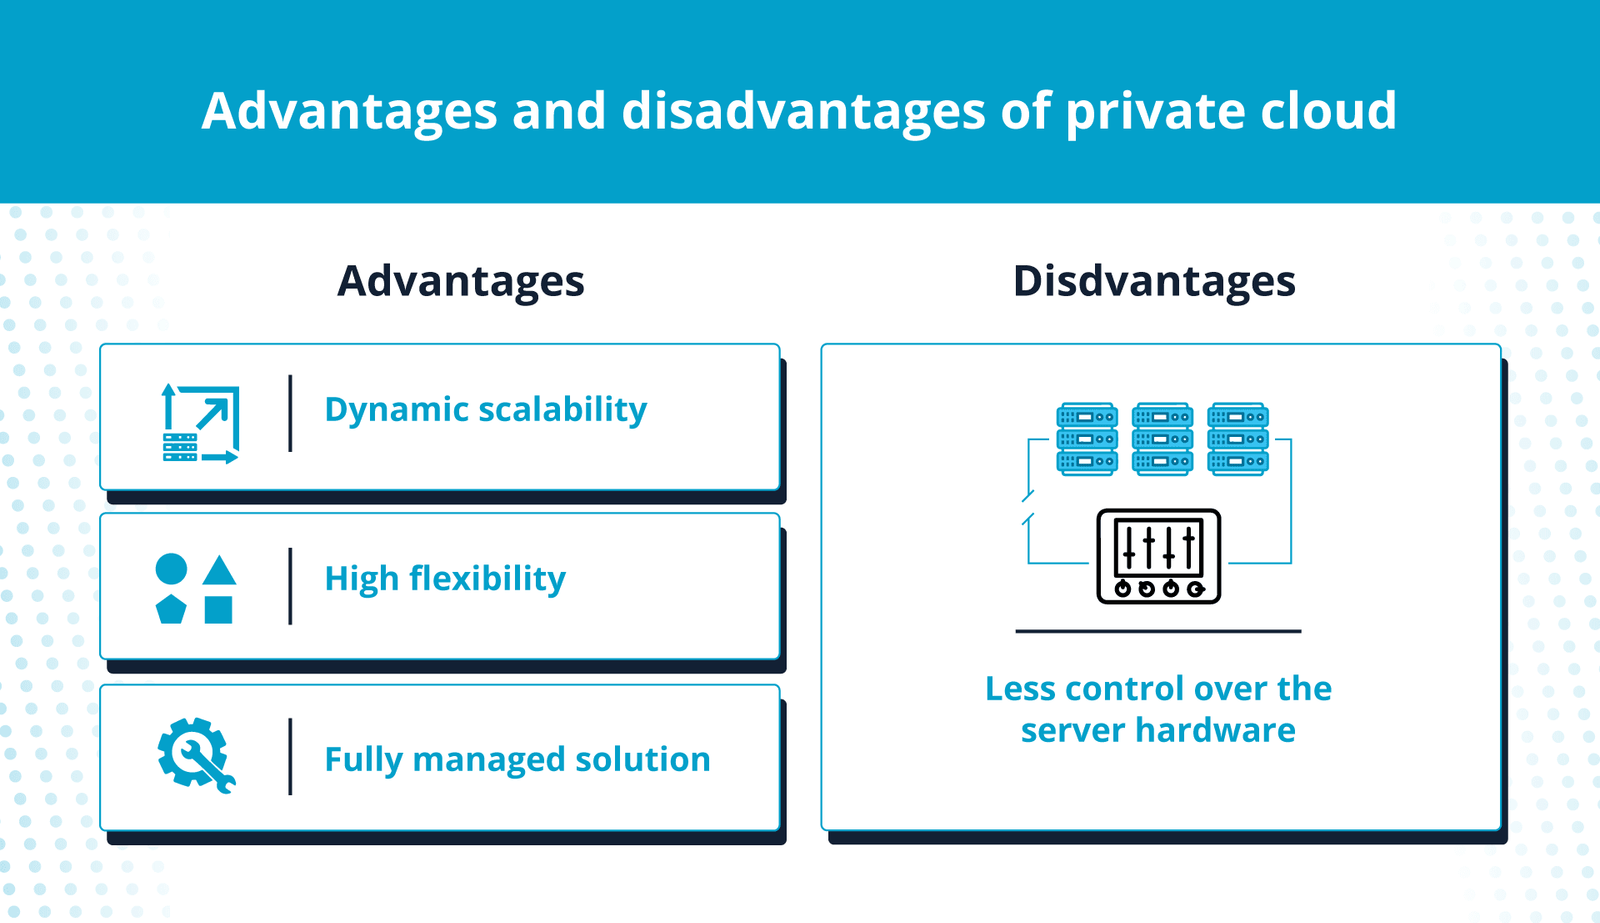 Let’s explore the advantages and disadvantages of private cloud.